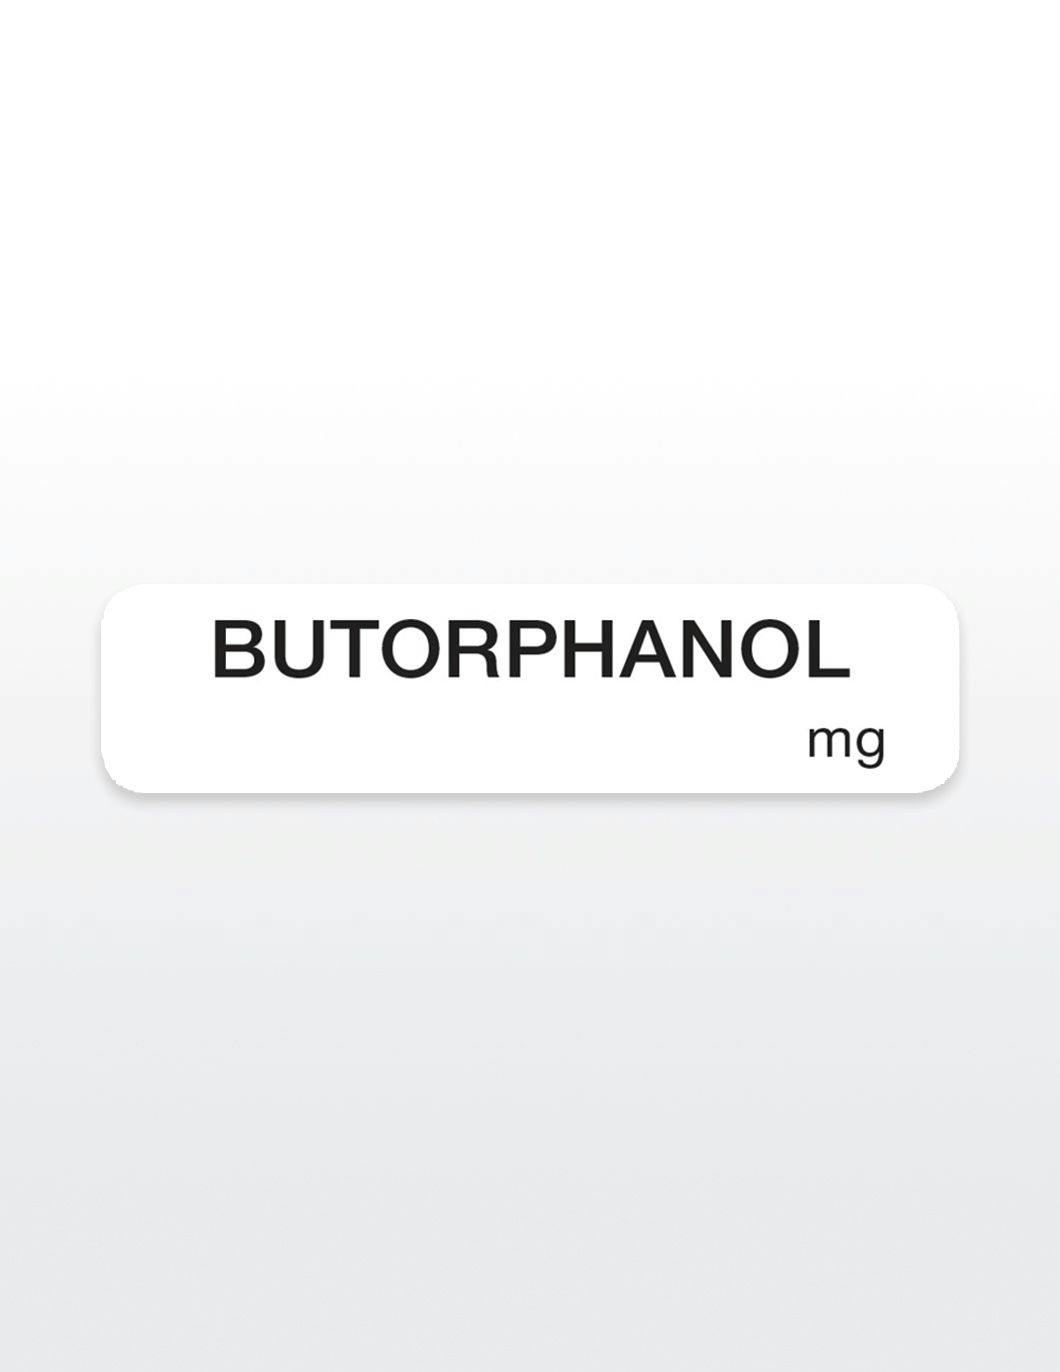 butorphanol-drug-syringe-stickers